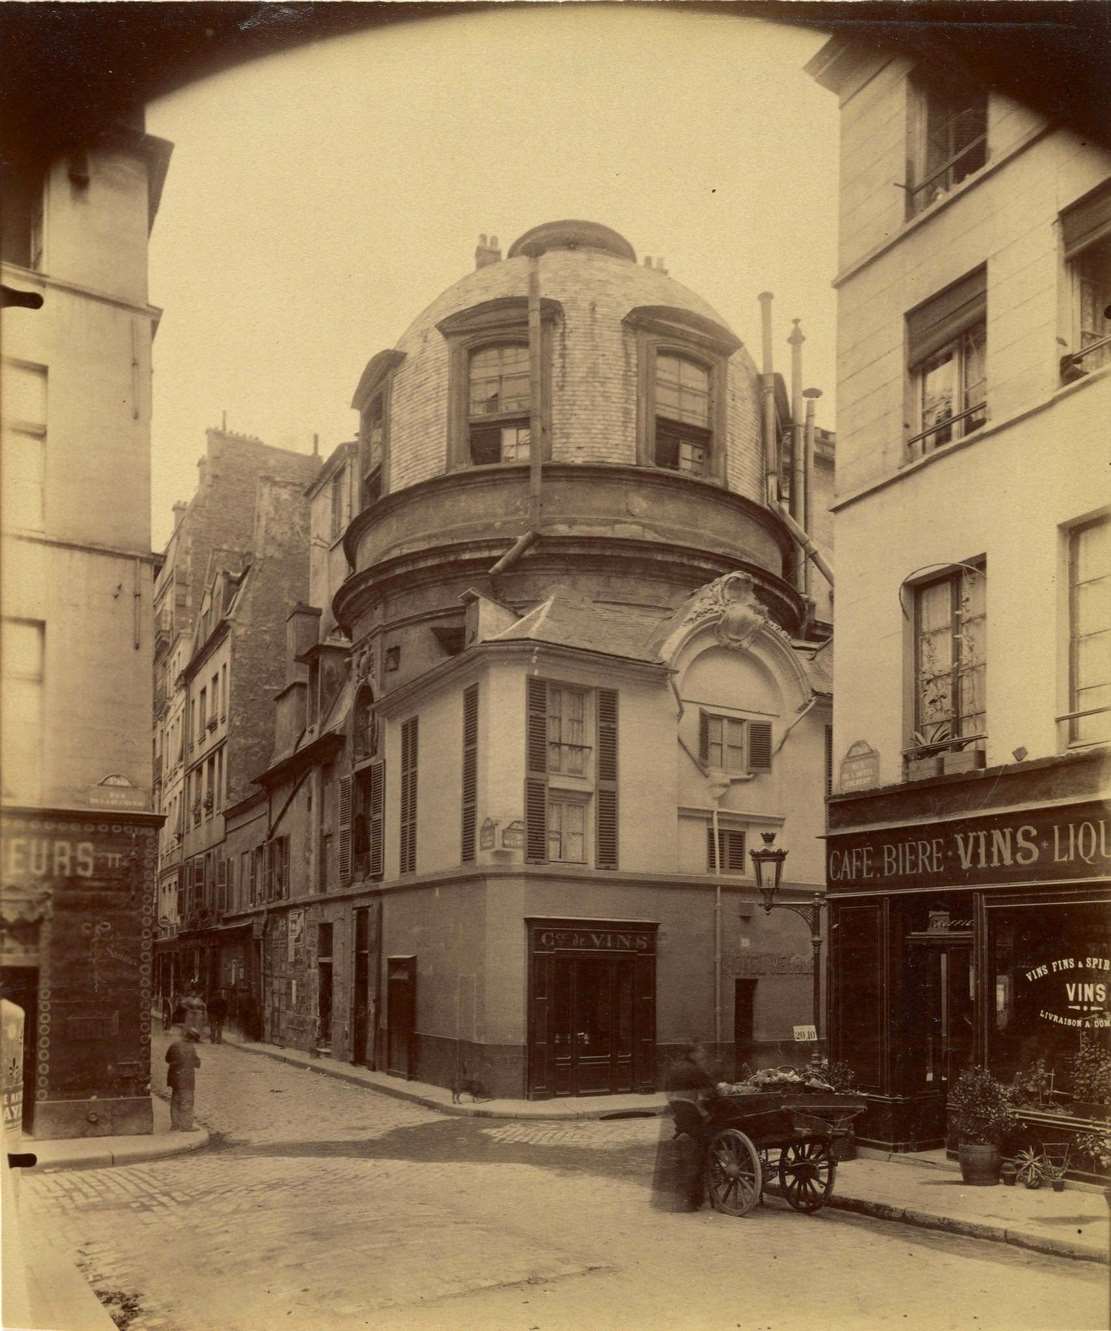 The Old School of Medicine, rue de la Bucherie, 1898